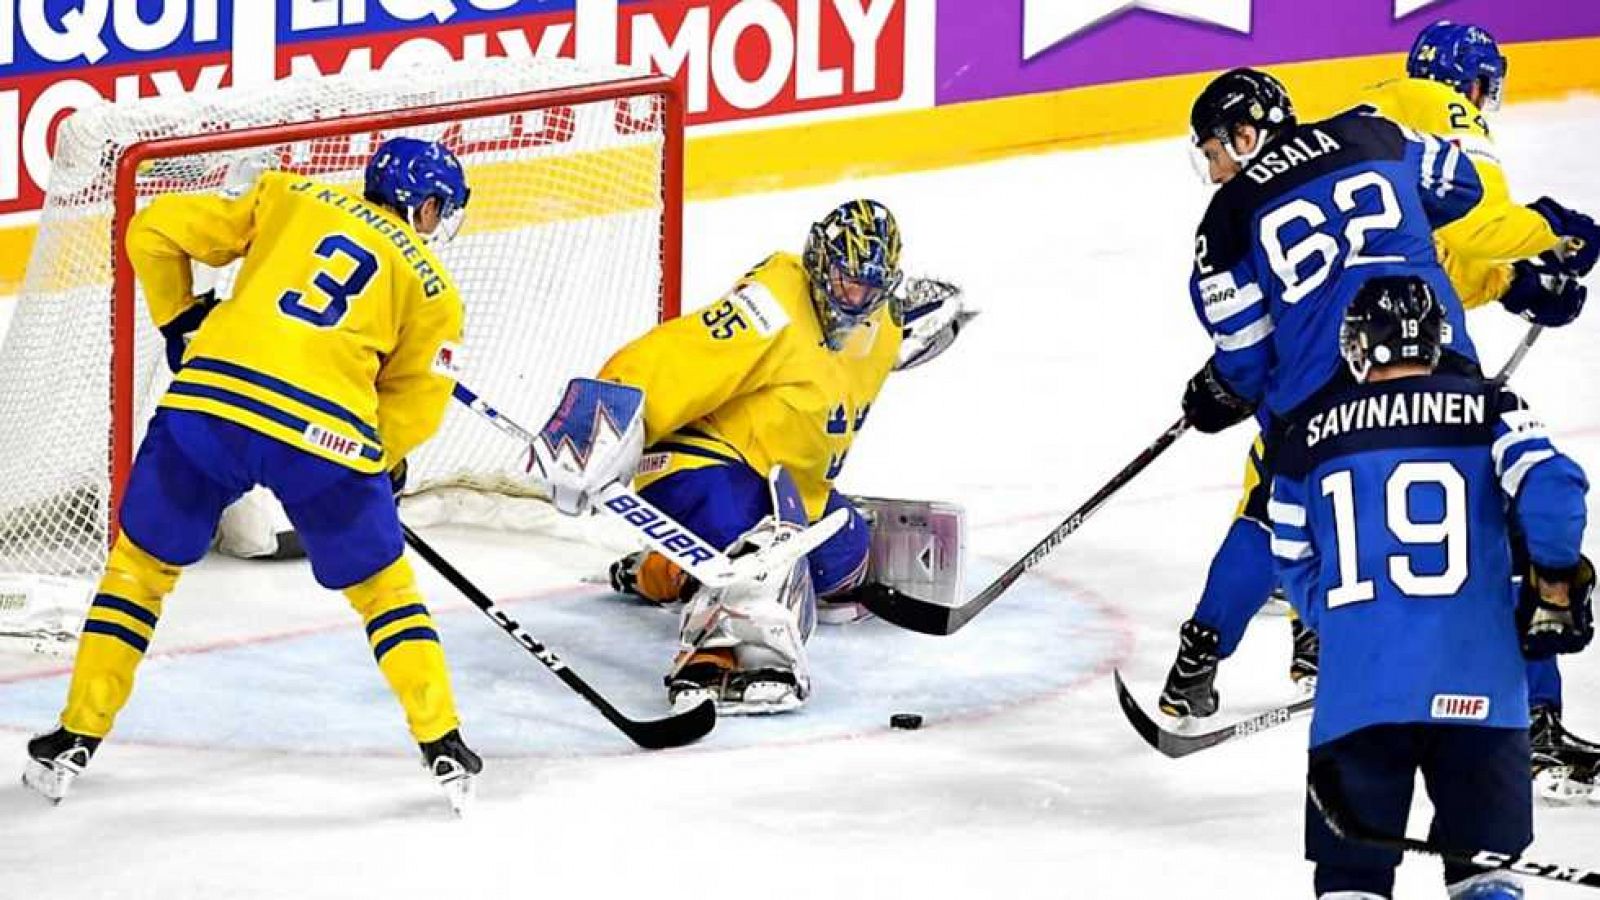 Hockey Hielo - Campeonato del Mundo Masculino 2017. 2ª Semifinal: Suecia - Finlandia